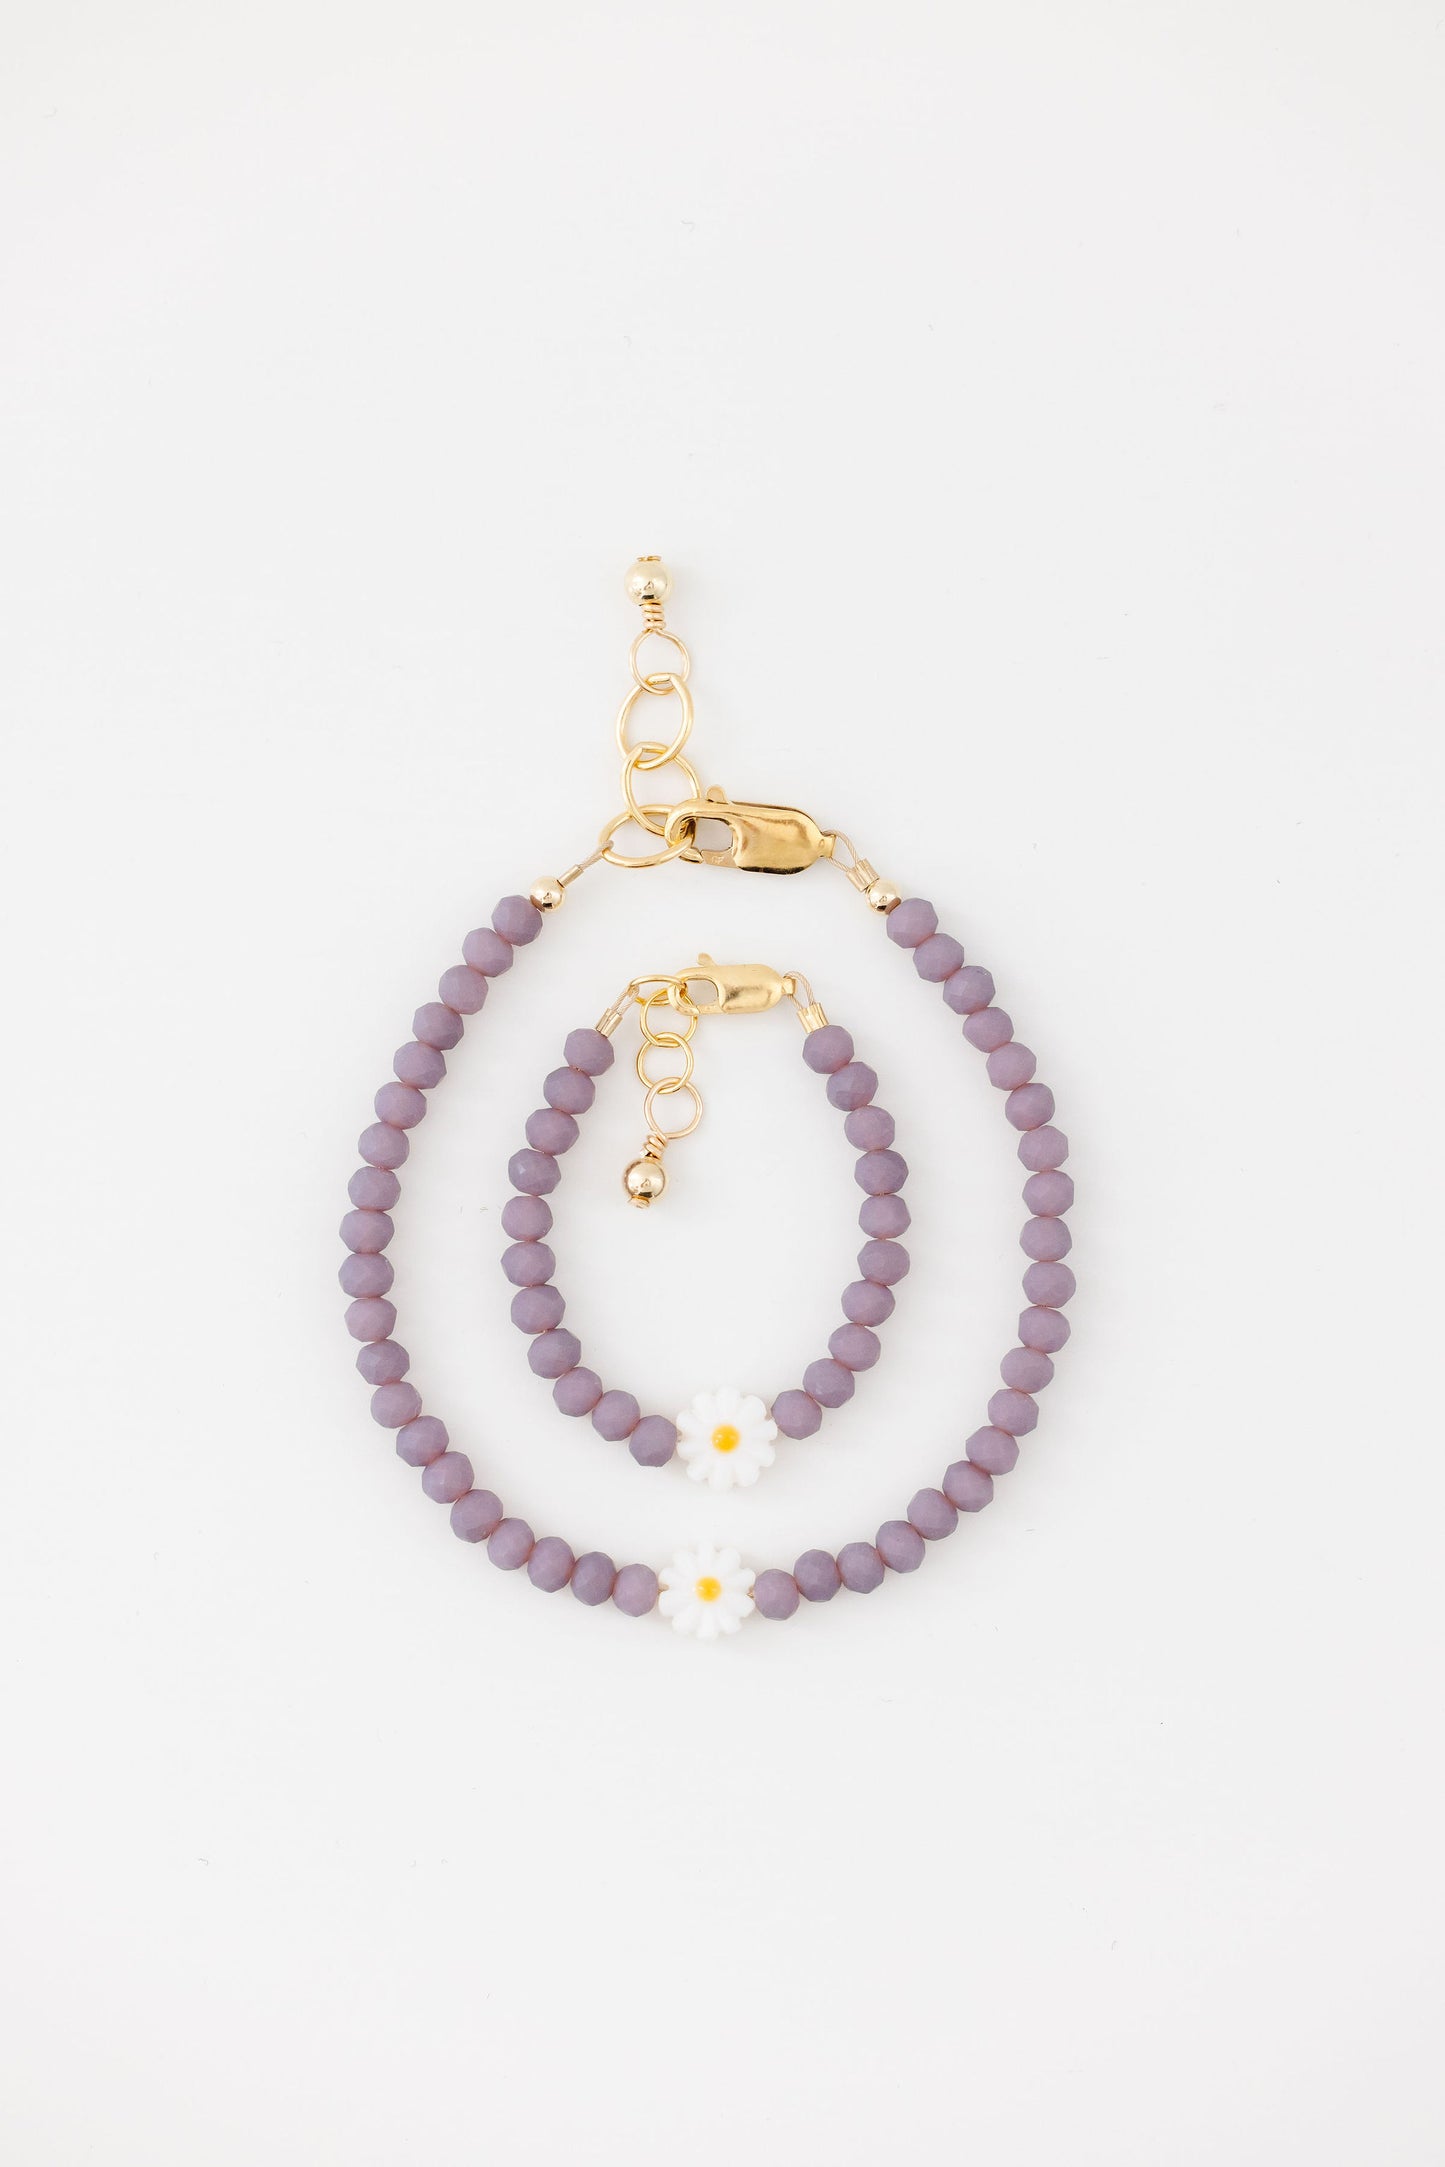 Daisy Mom + Mini Bracelet set (Finch 4MM Beads)